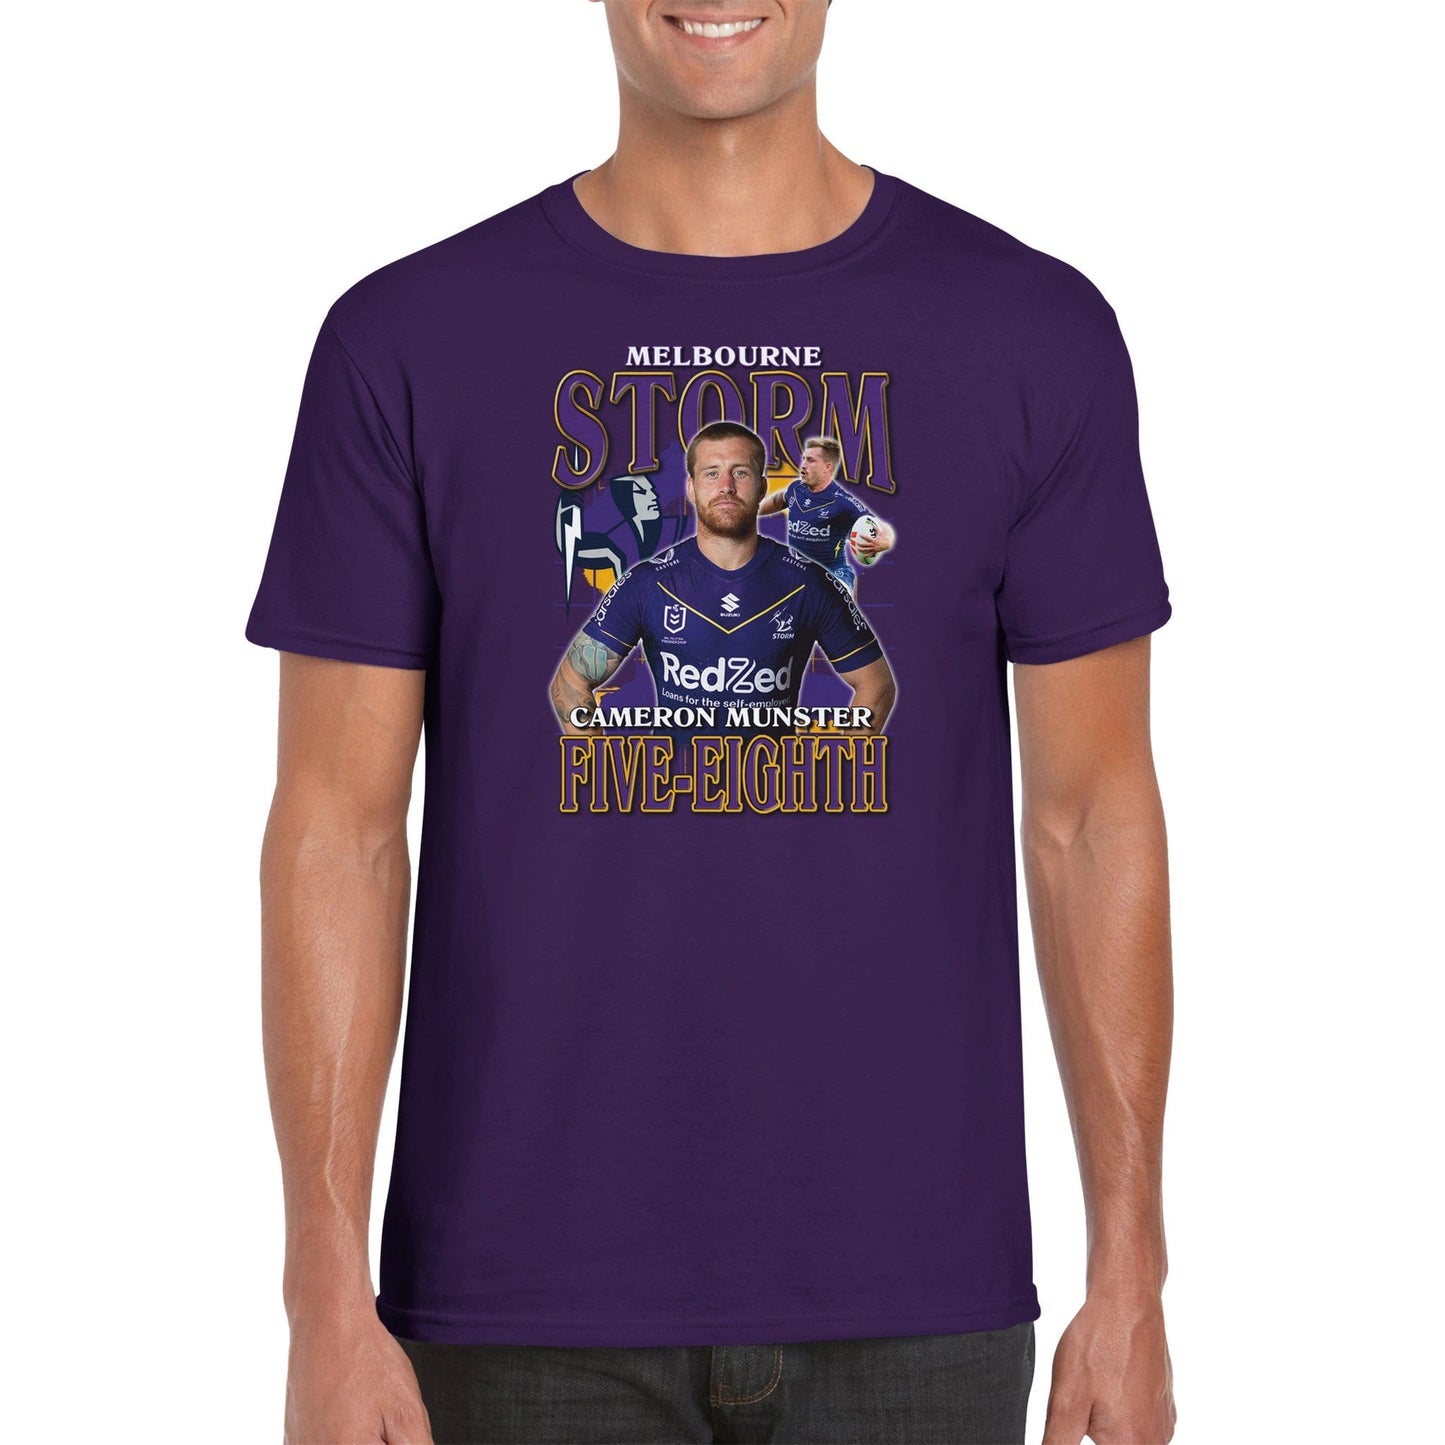 Cameron Munster T-shirt Australia Online Color